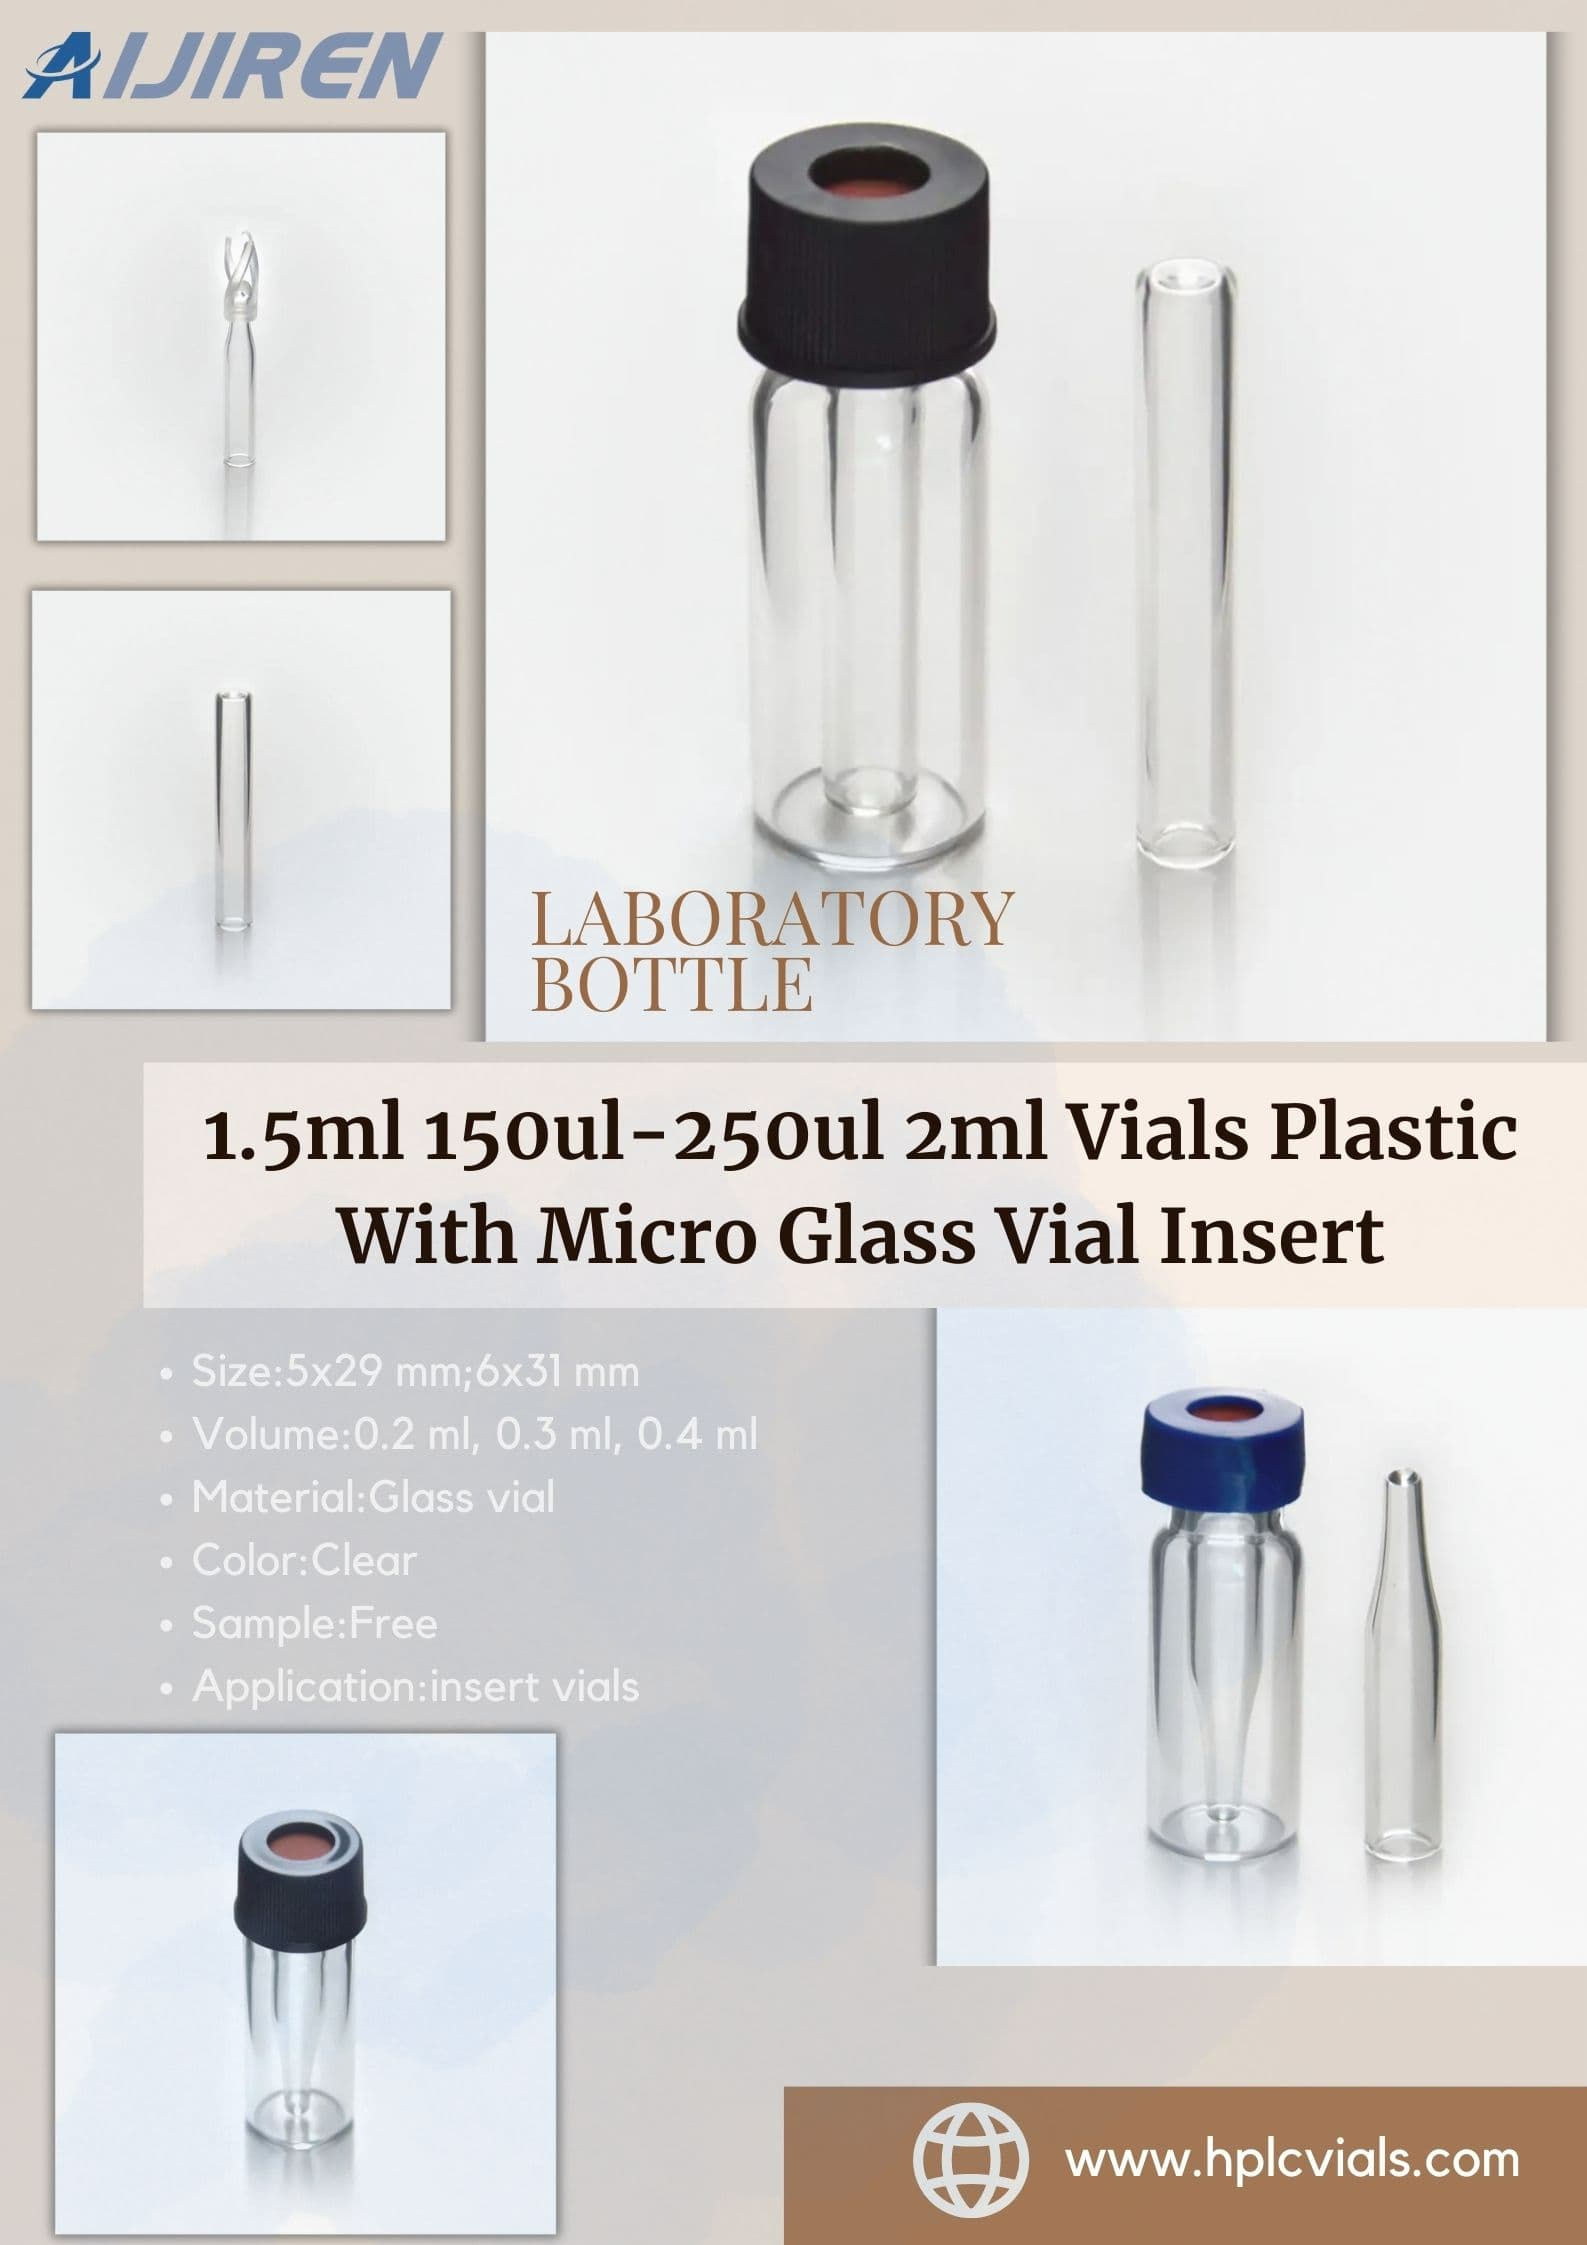 20ml headspace vialLaboratory Bottle 1.5ml 150ul-250ul 2ml Clear Vials Plastic With Micro Glass Vial Insert